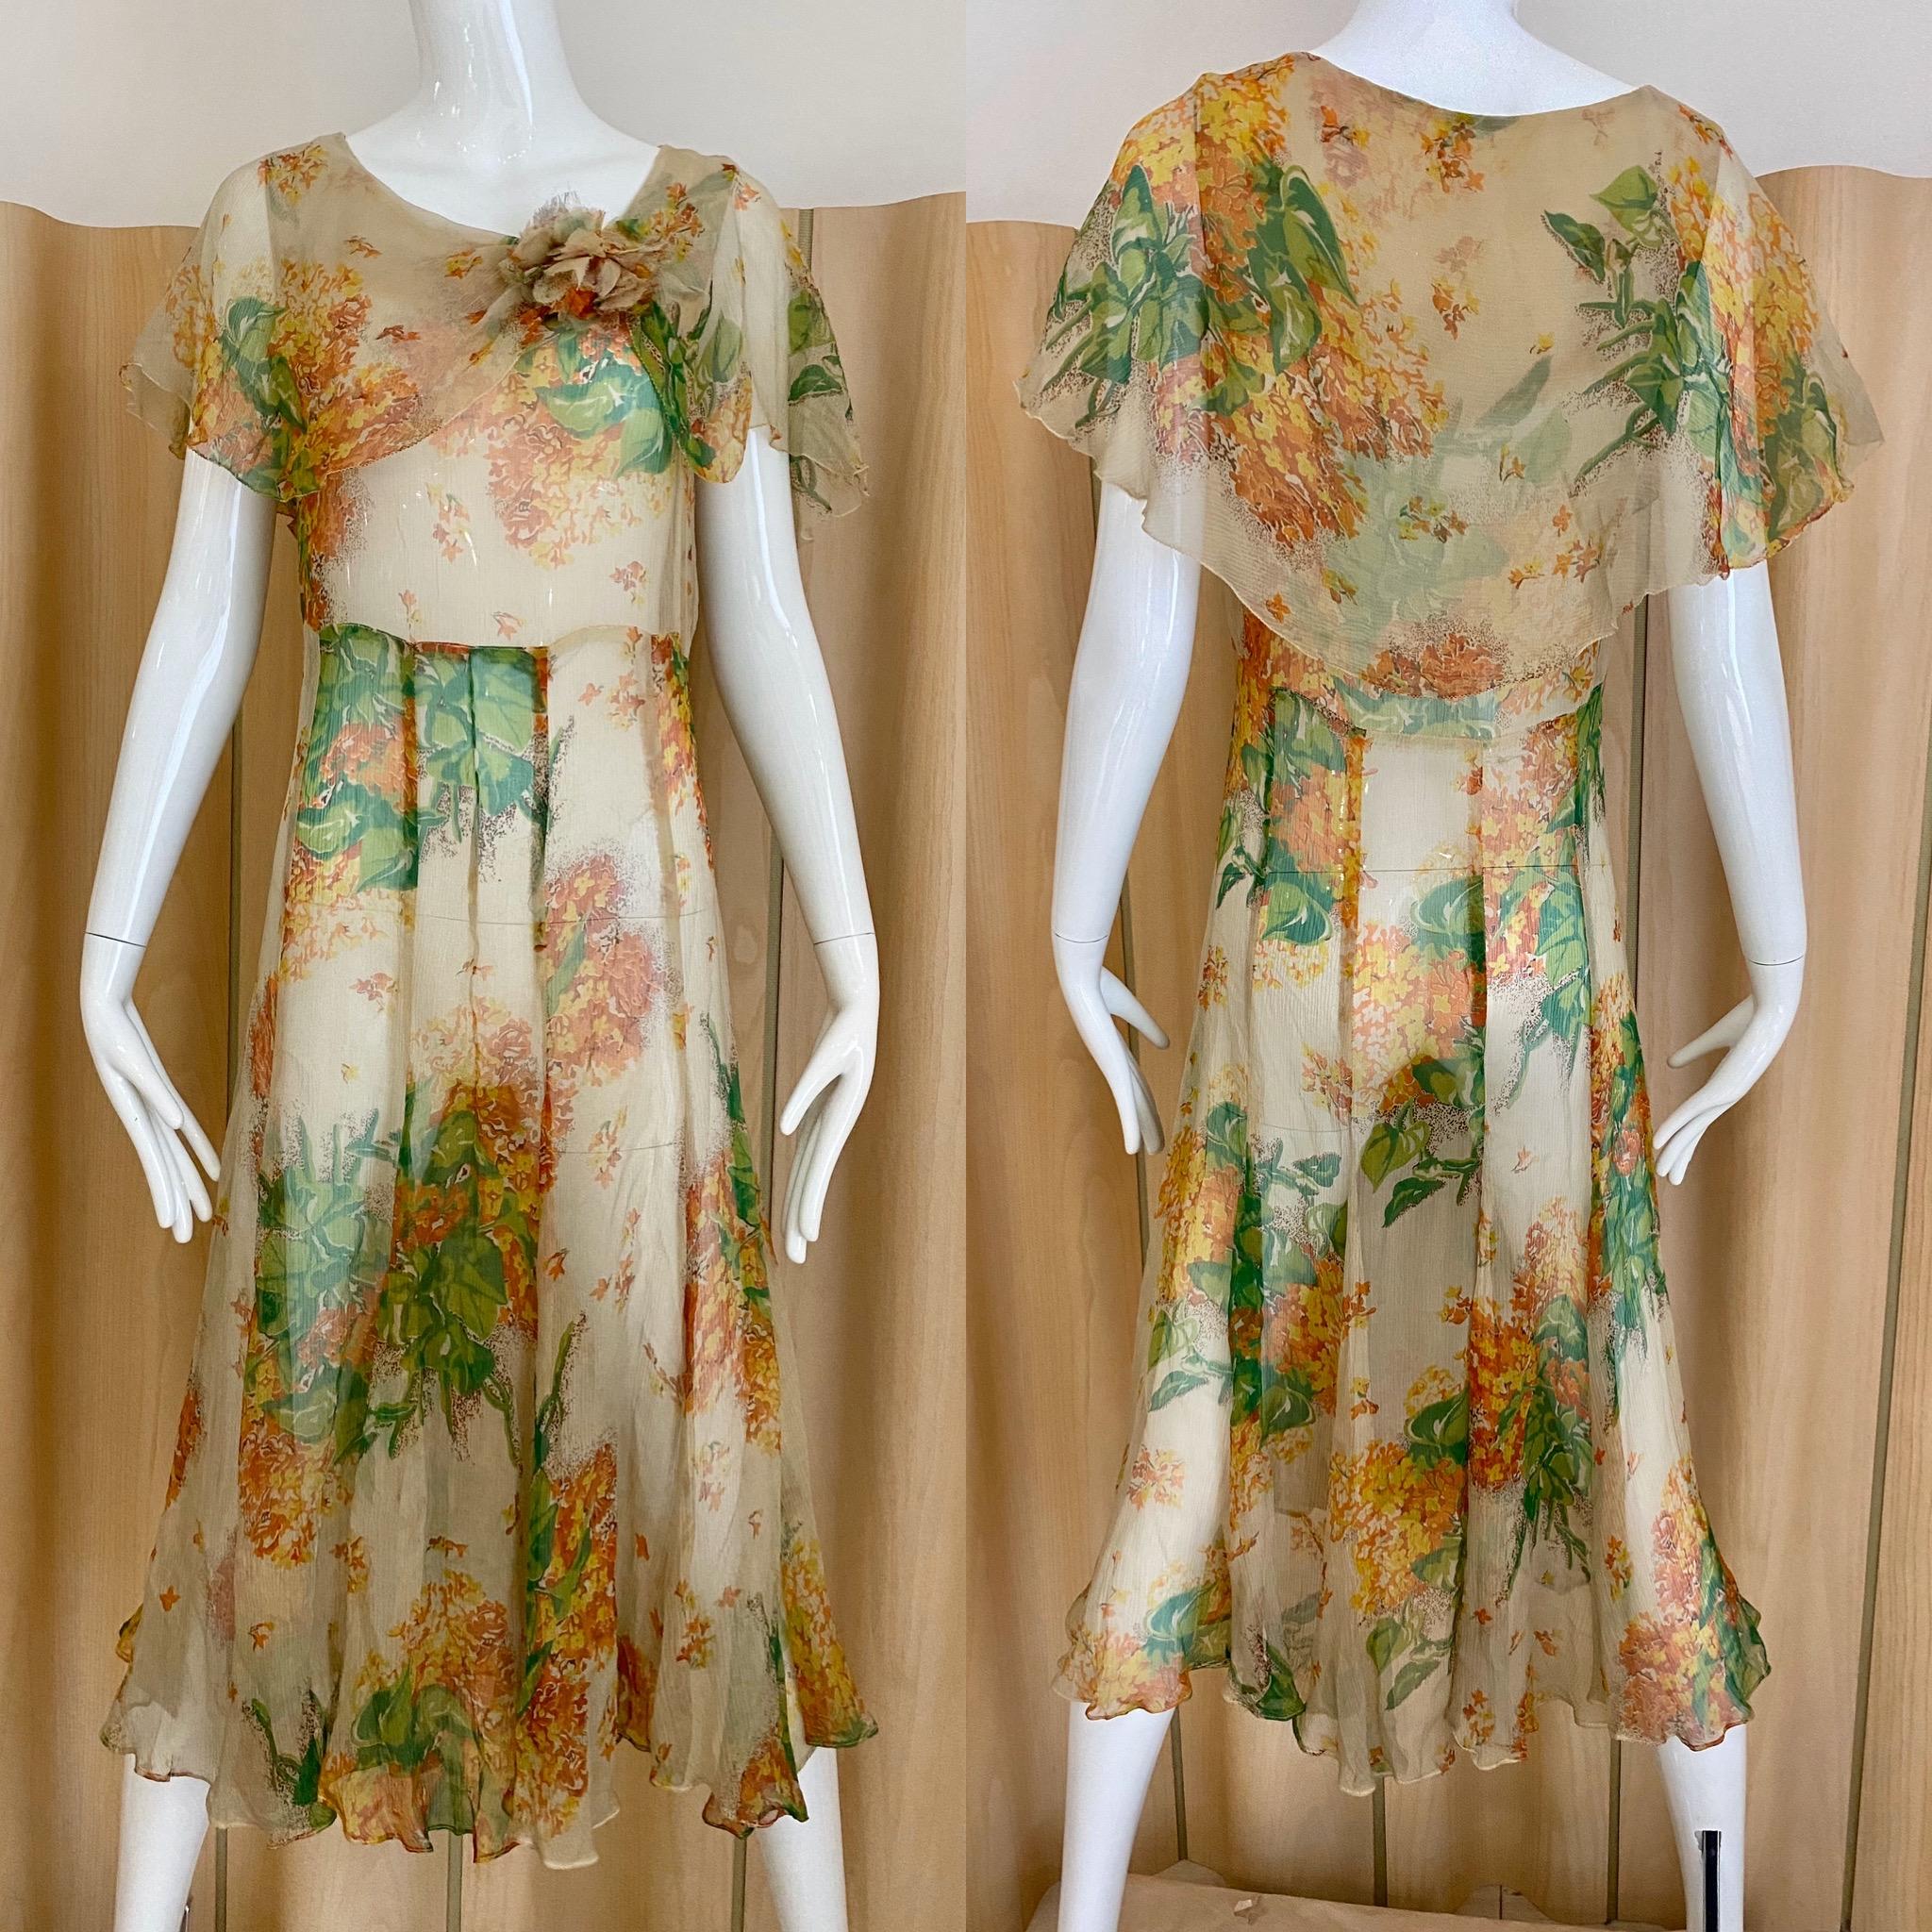 Vintage 30s creme, green, orange floral print silk day dress.
Fit size 2/4